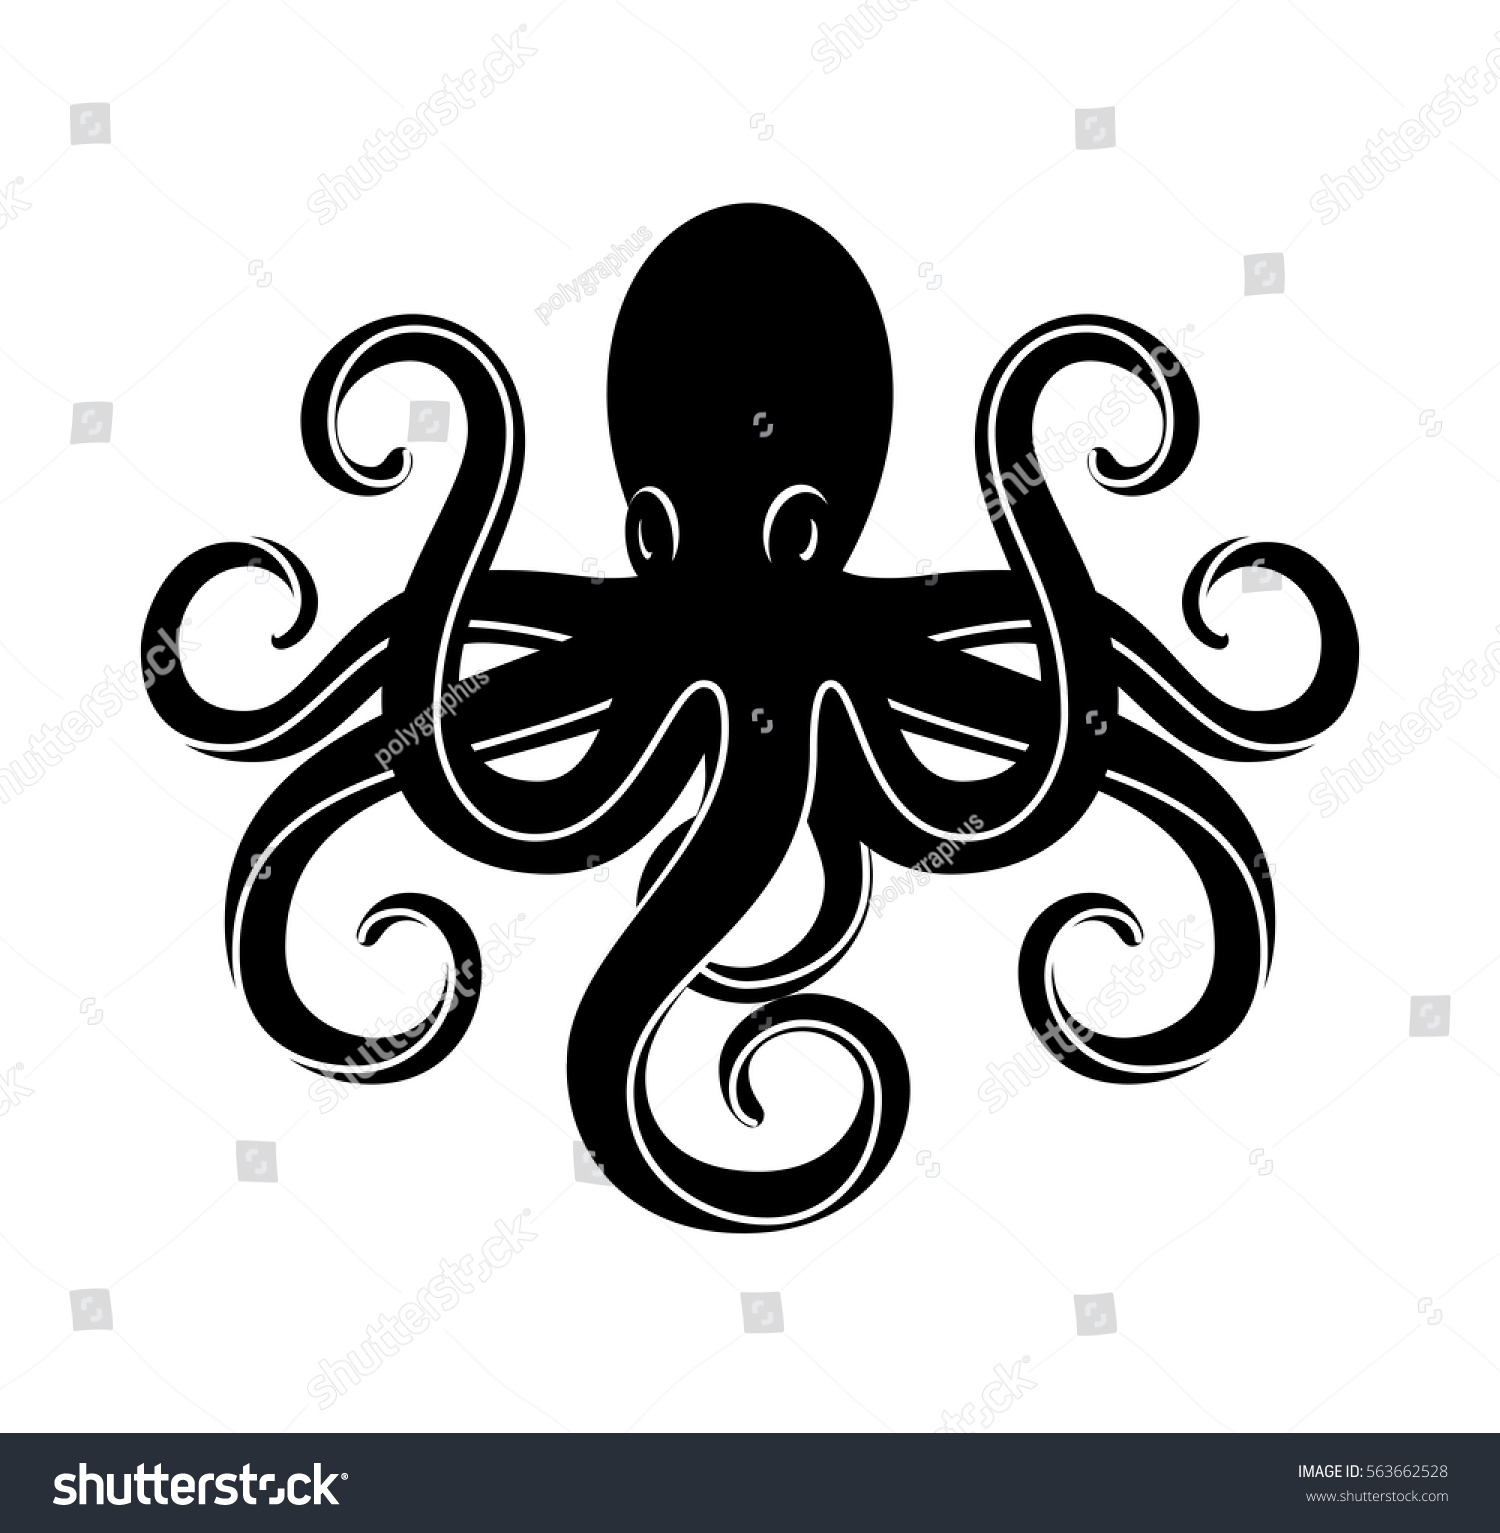  Vector  Cartoon Octopus  Stock Vector  563662528 Shutterstock